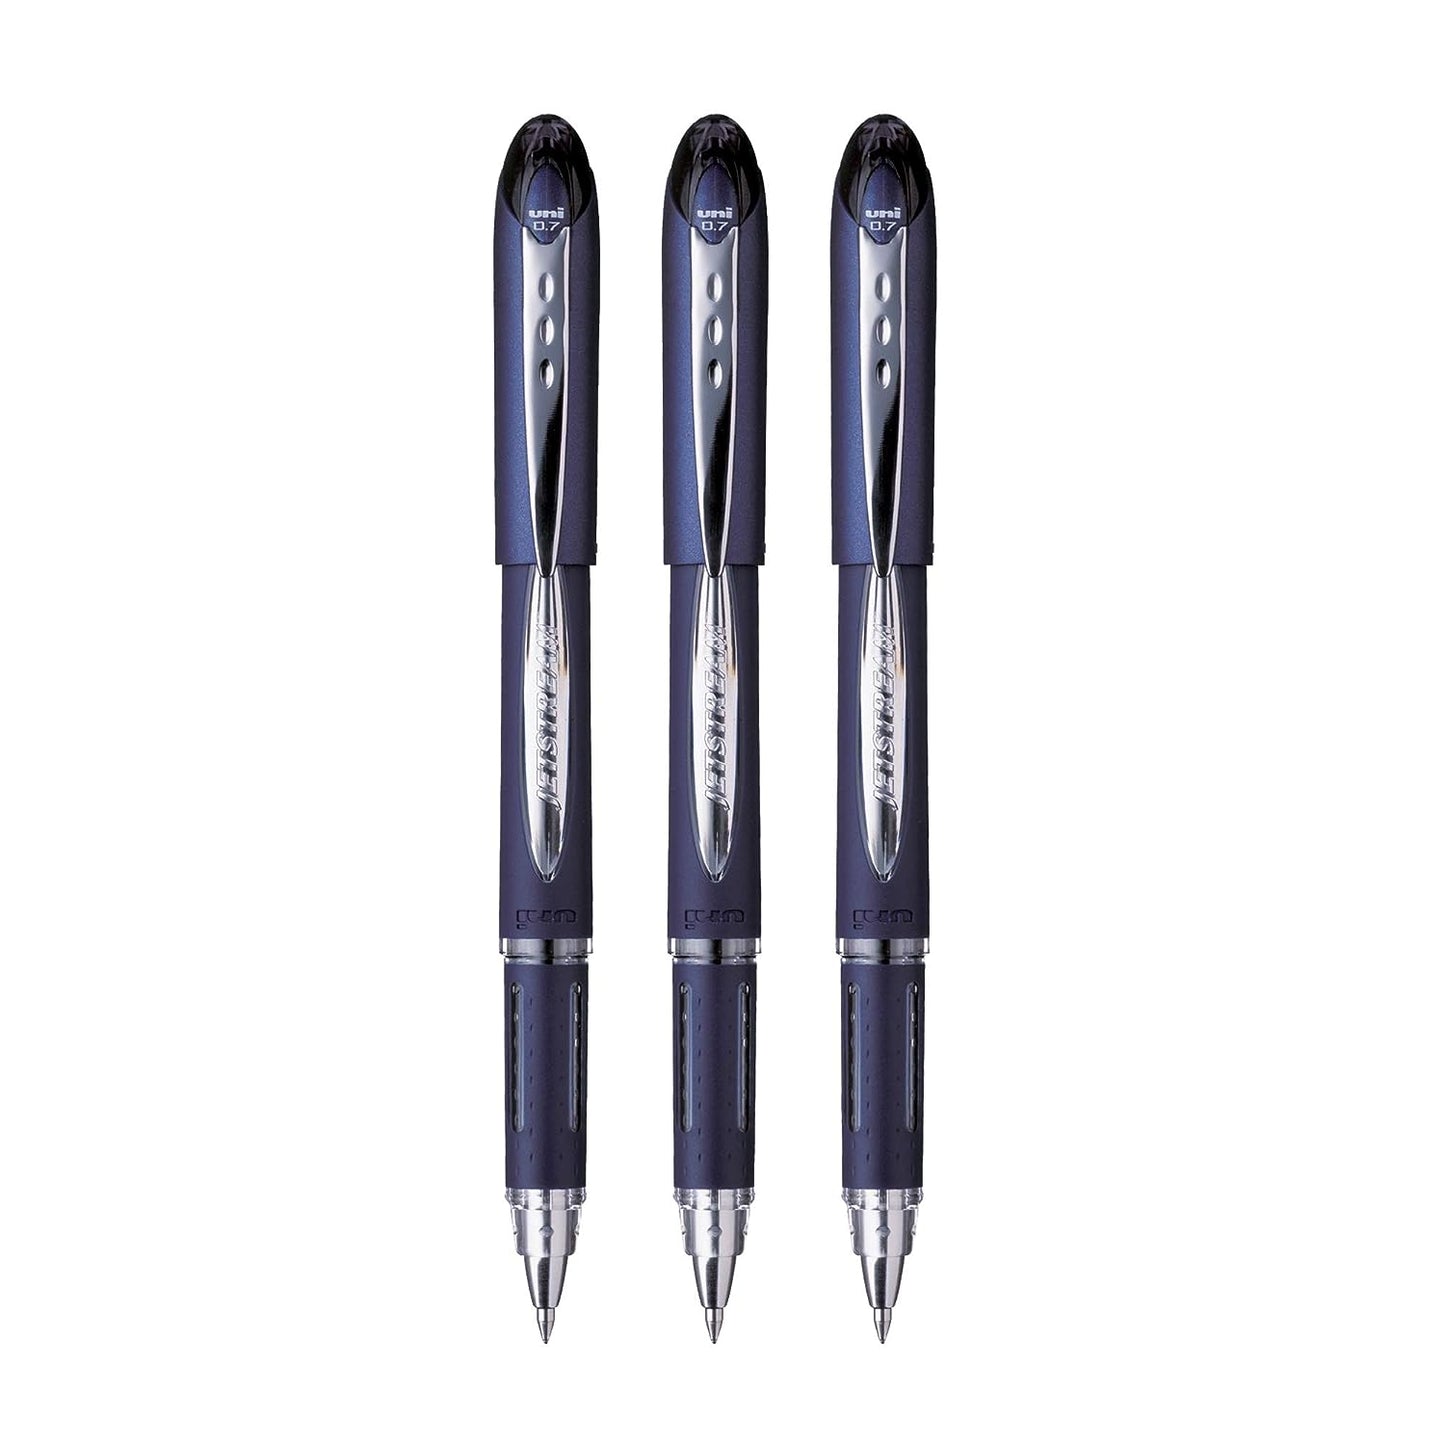 UniBall Jetstream Sx217 Roller Ball Pen - Black Ink